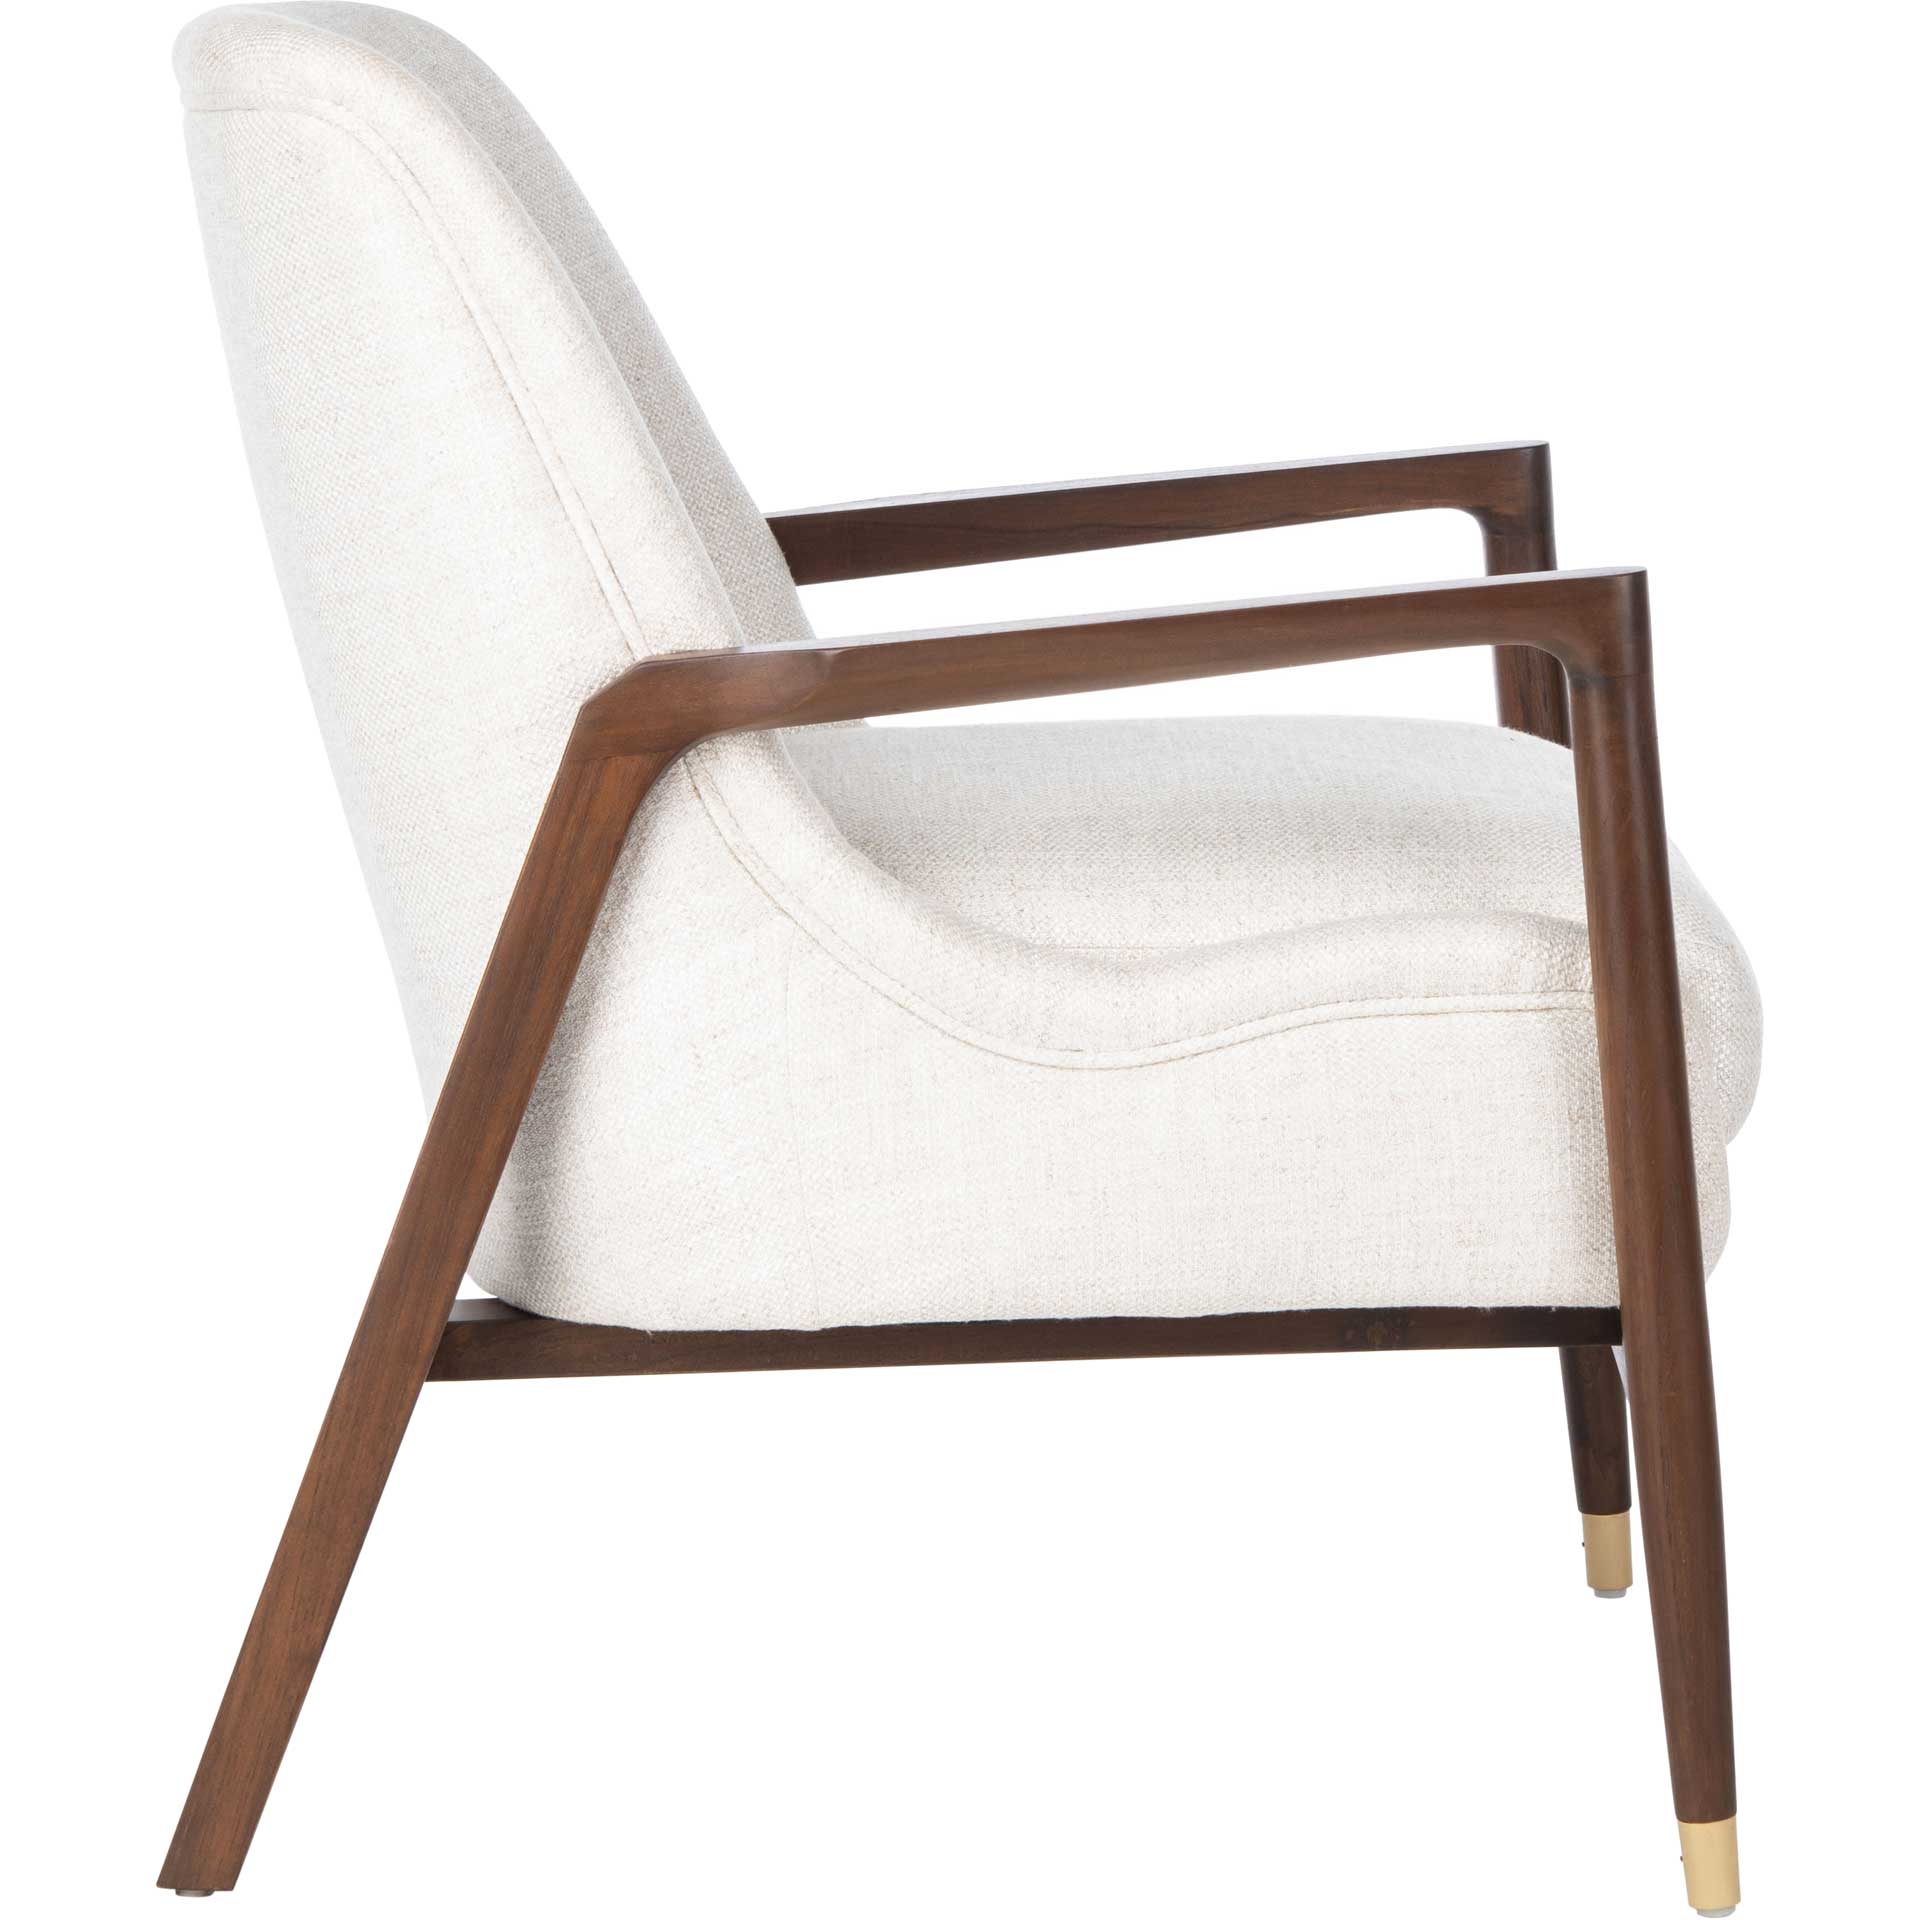 Flourish Mid-Century Accent Chair Cream